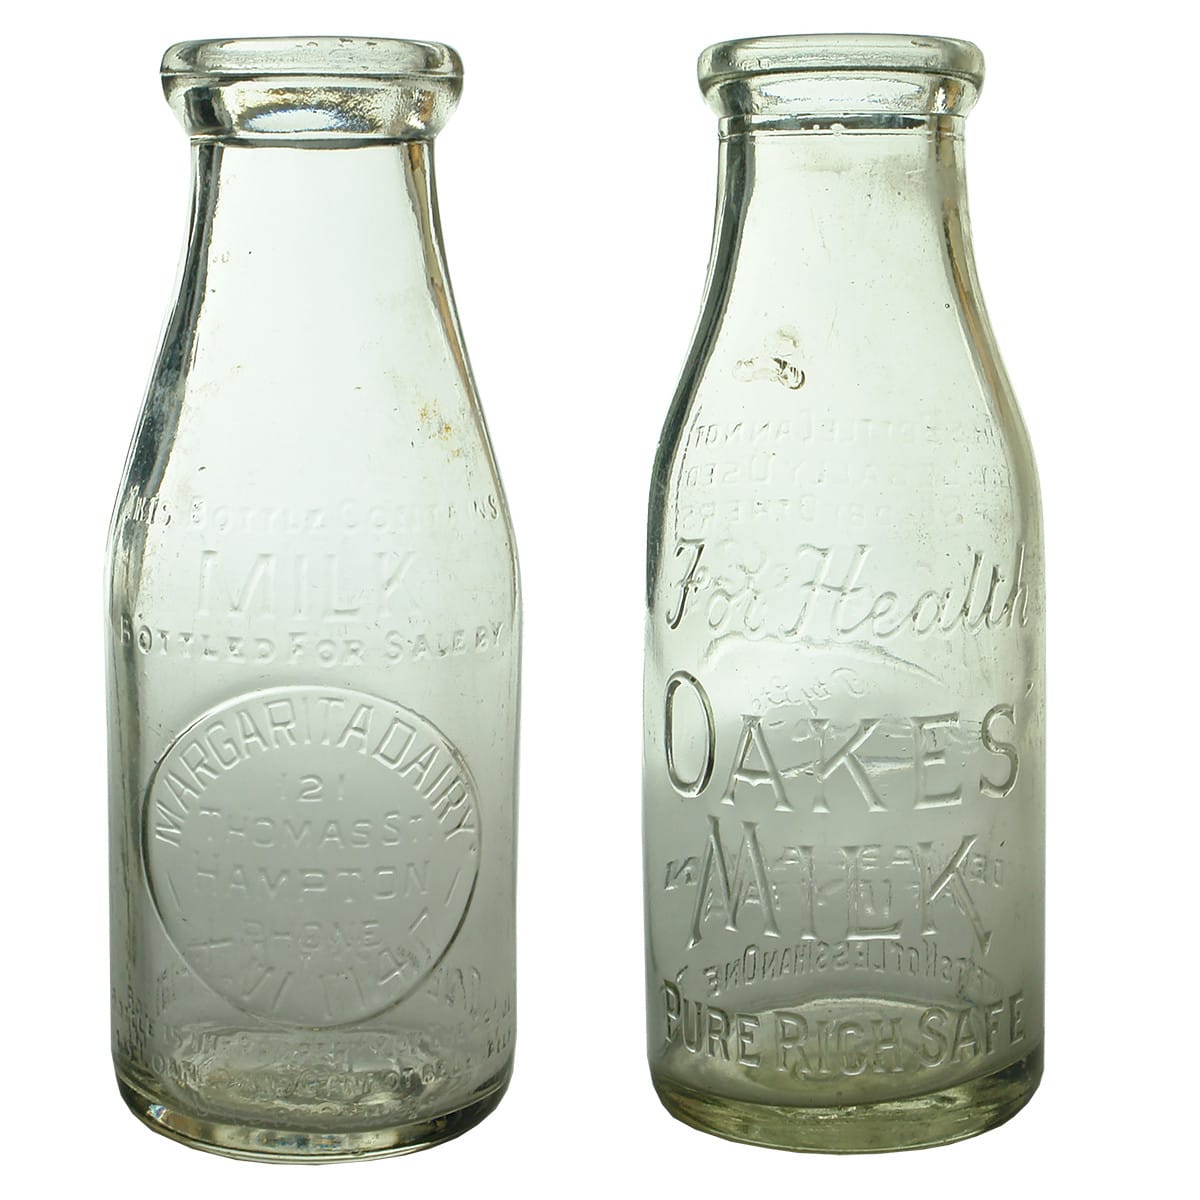 2 Pint Milks. Margarita Dairy, Thomas St., Hampton. Base: 340. and A. Oakes & Sons Pty Ltd, Richmond. Base: 28. (Victoria)